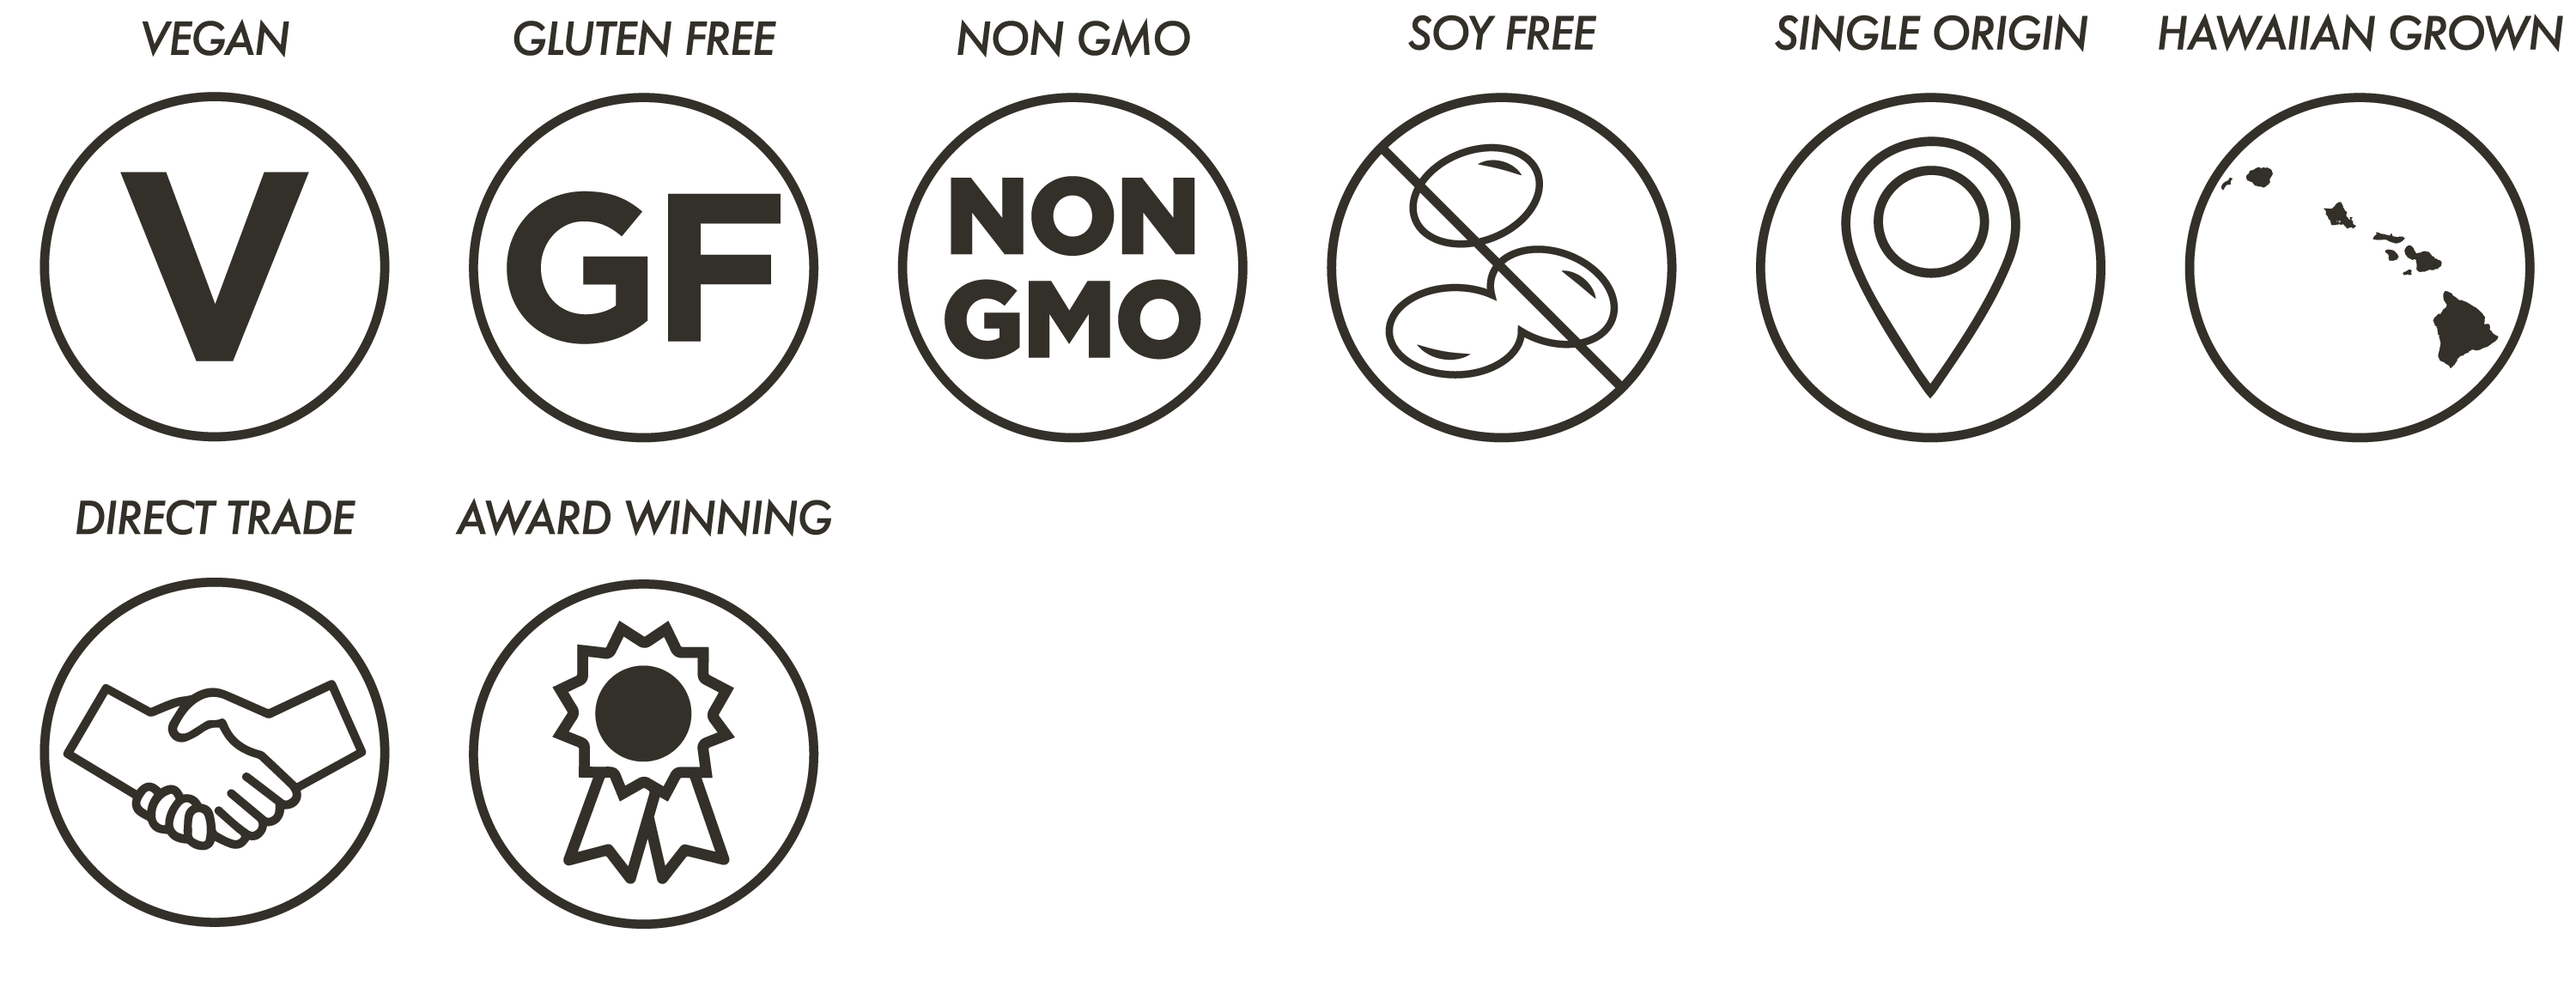 vegan, gluten-free, non-gmo, soy free, single origin, direct trade, hawaiian grown, award winning